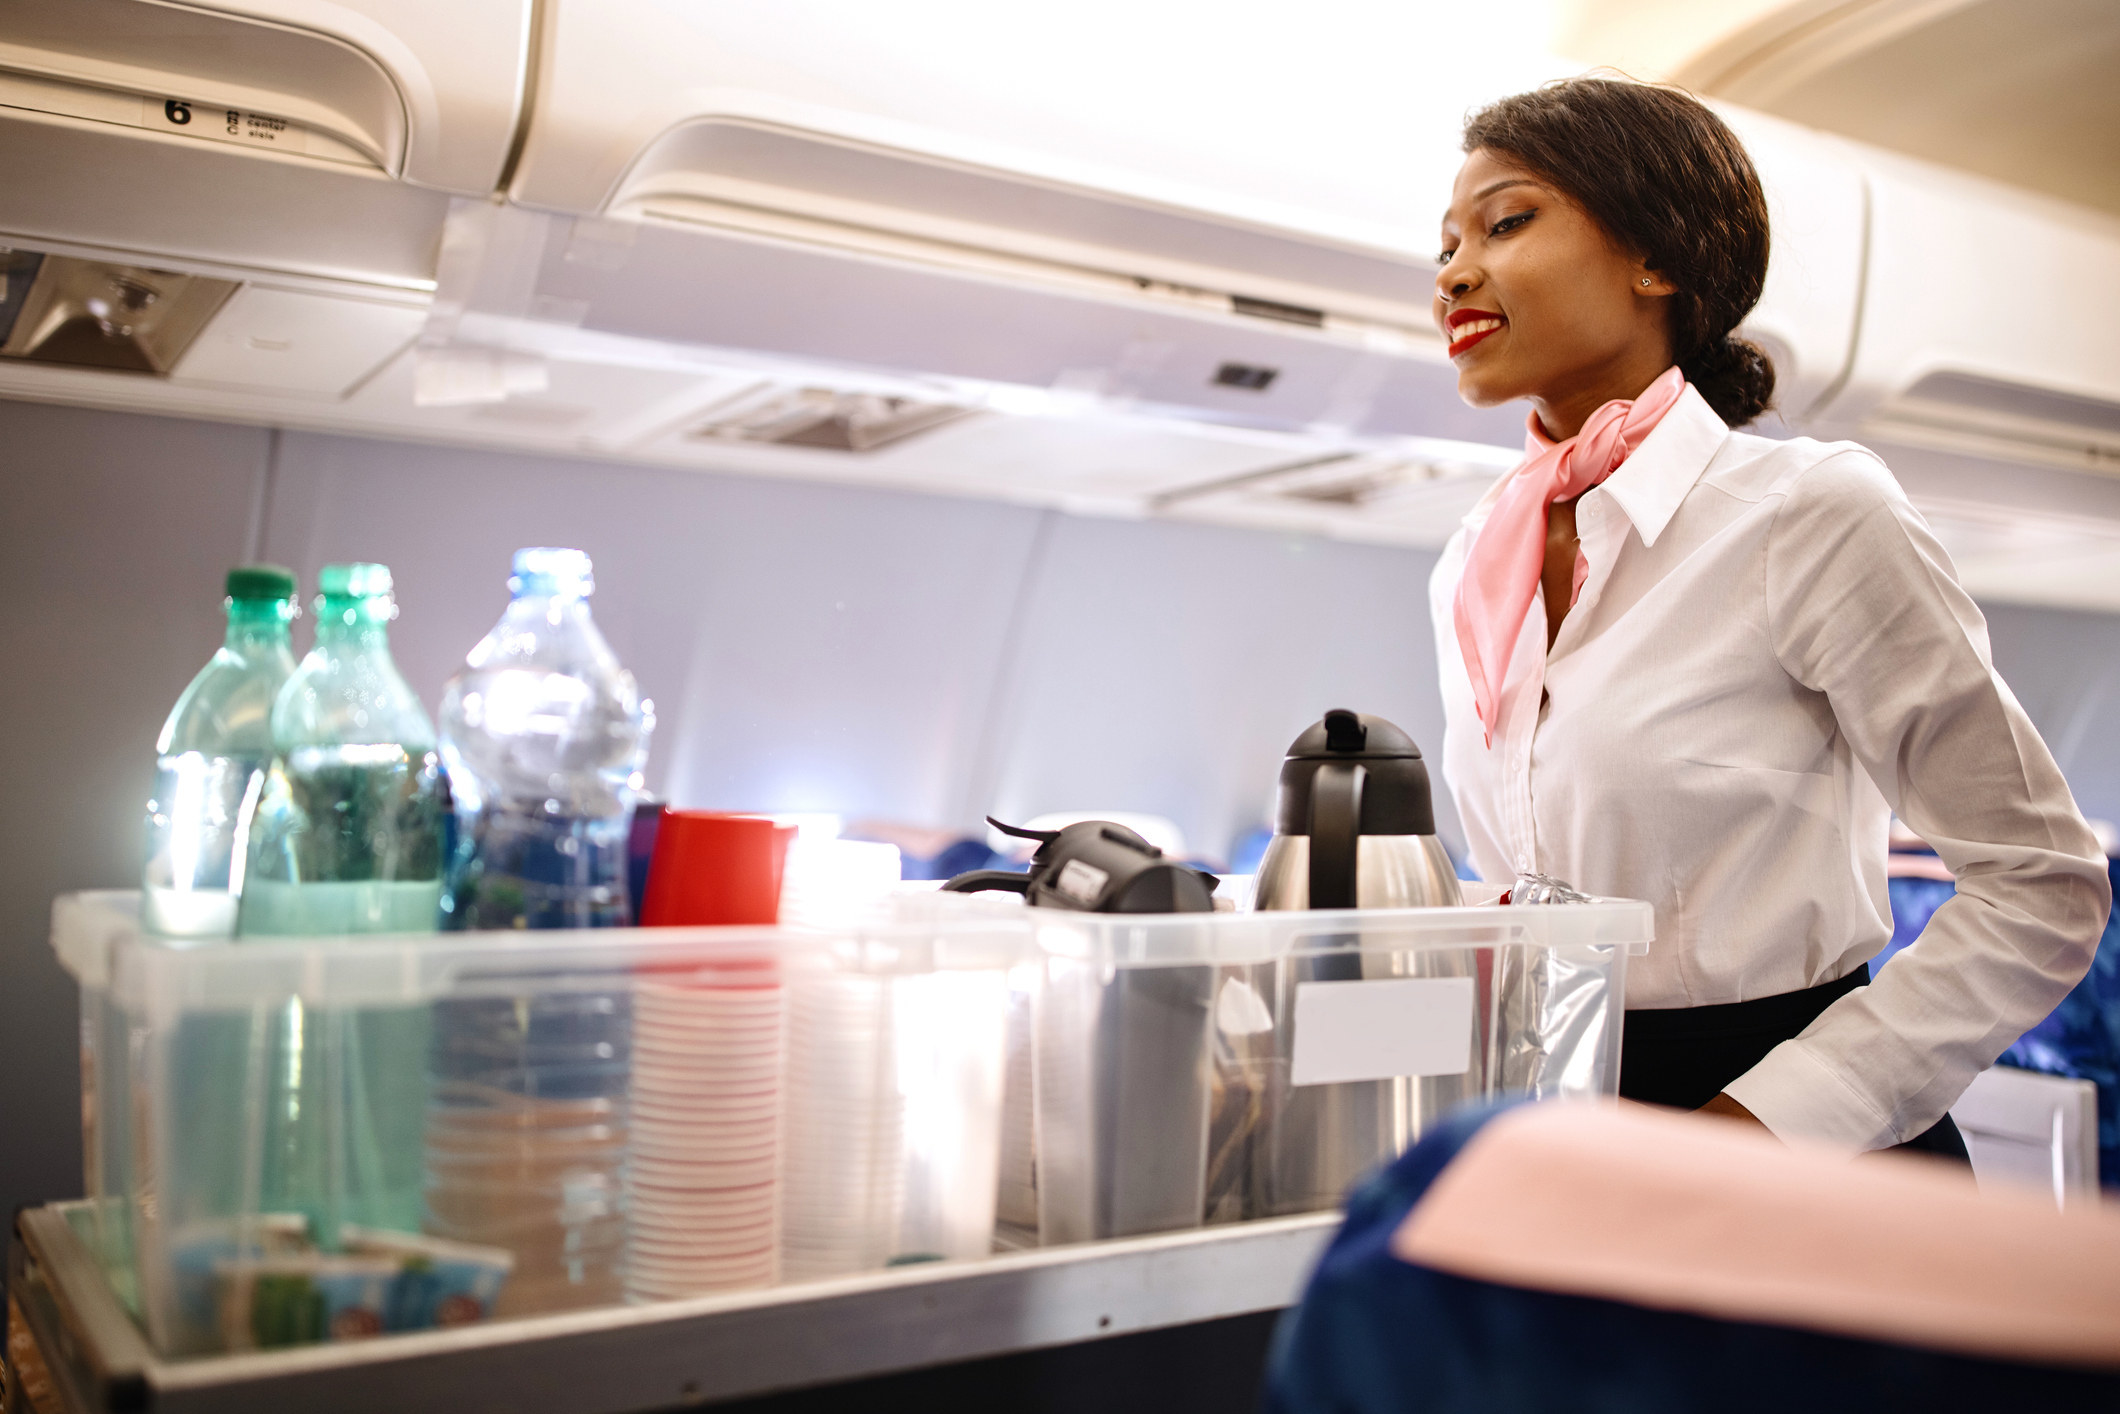 A flight attendant pushing the drink cart